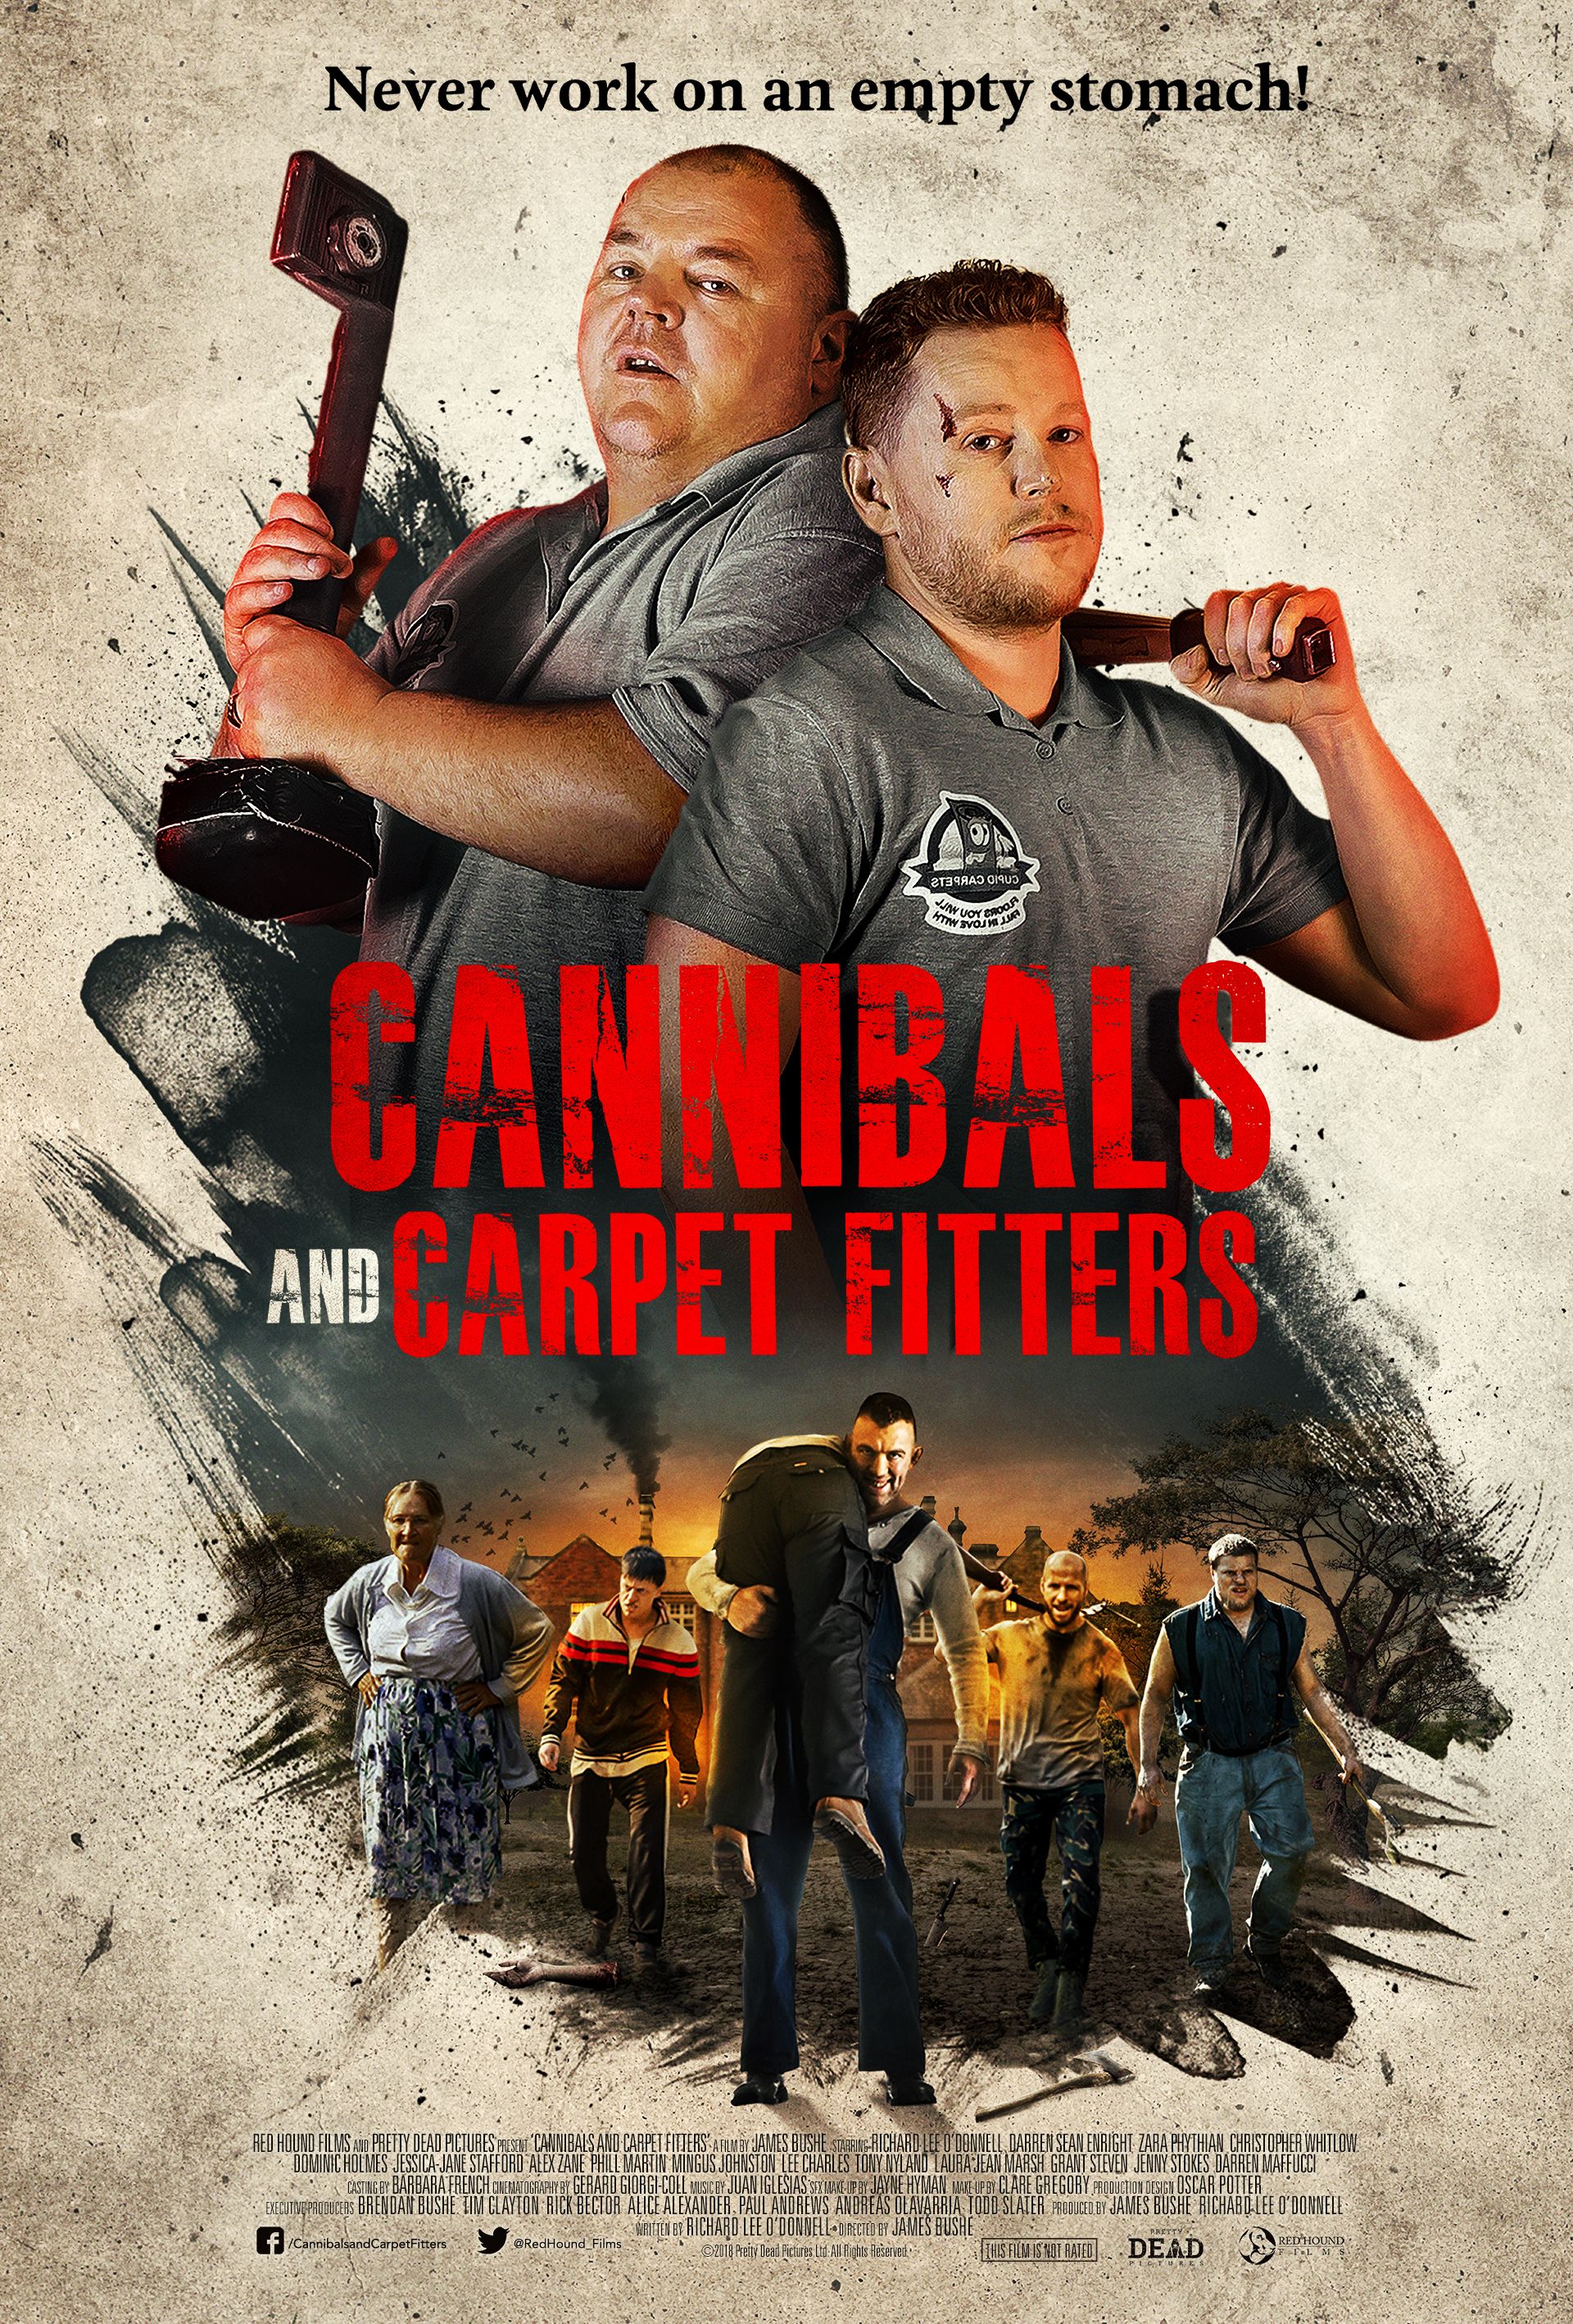 Nonton film Cannibals and Carpet Fitters layarkaca21 indoxx1 ganool online streaming terbaru